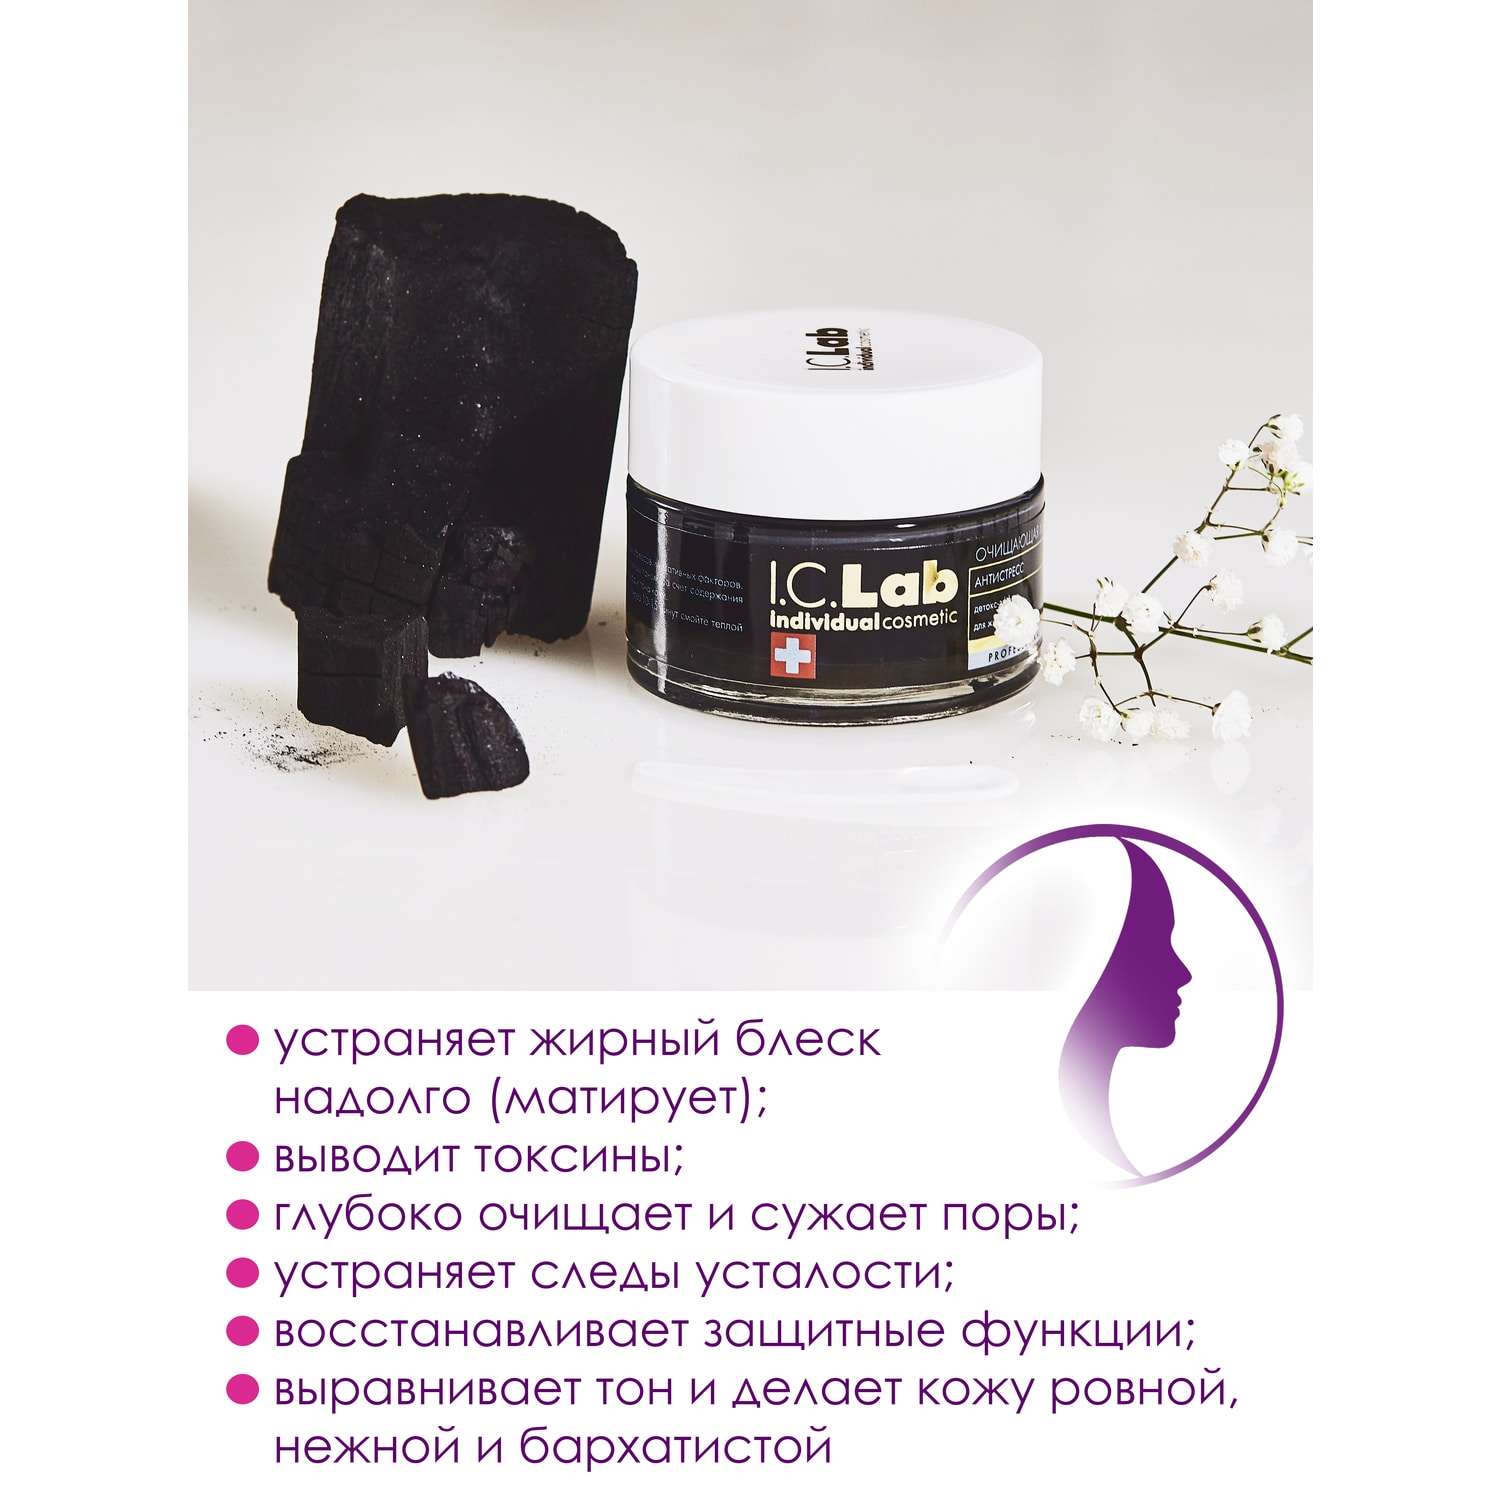 Маска для лица I.C.Lab Individual cosmetic Очищающая Антистресс 50 мл - фото 2